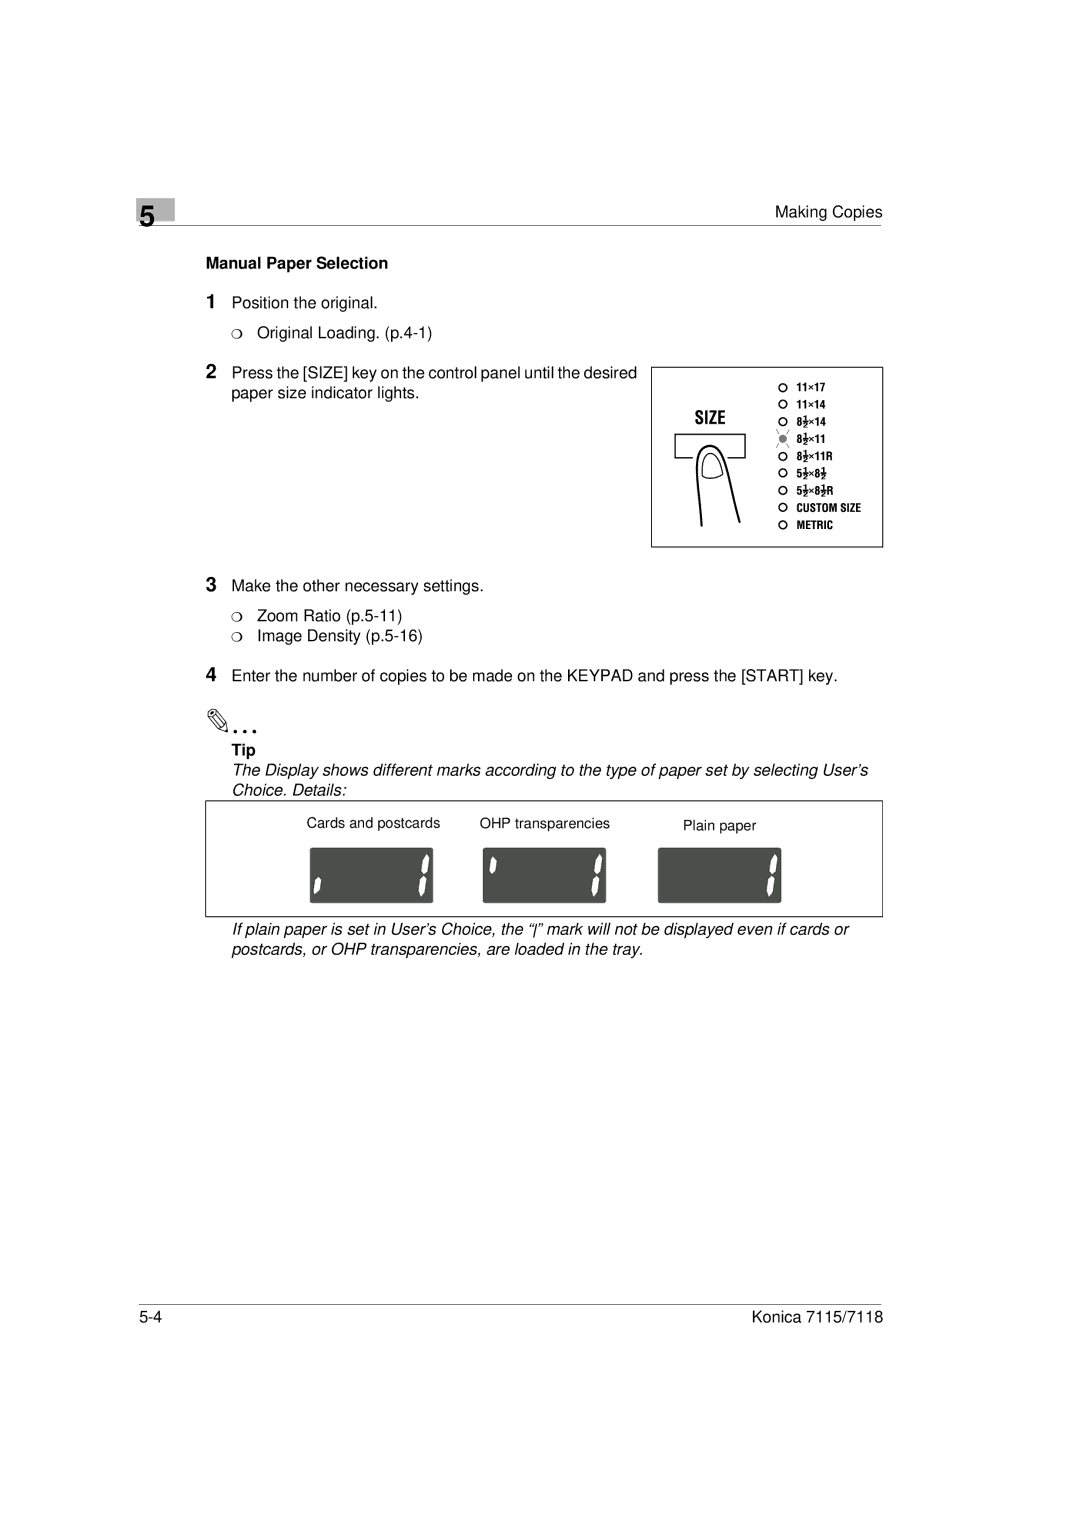 Konica Minolta Printer Copier manual Manual Paper Selection, Tip 